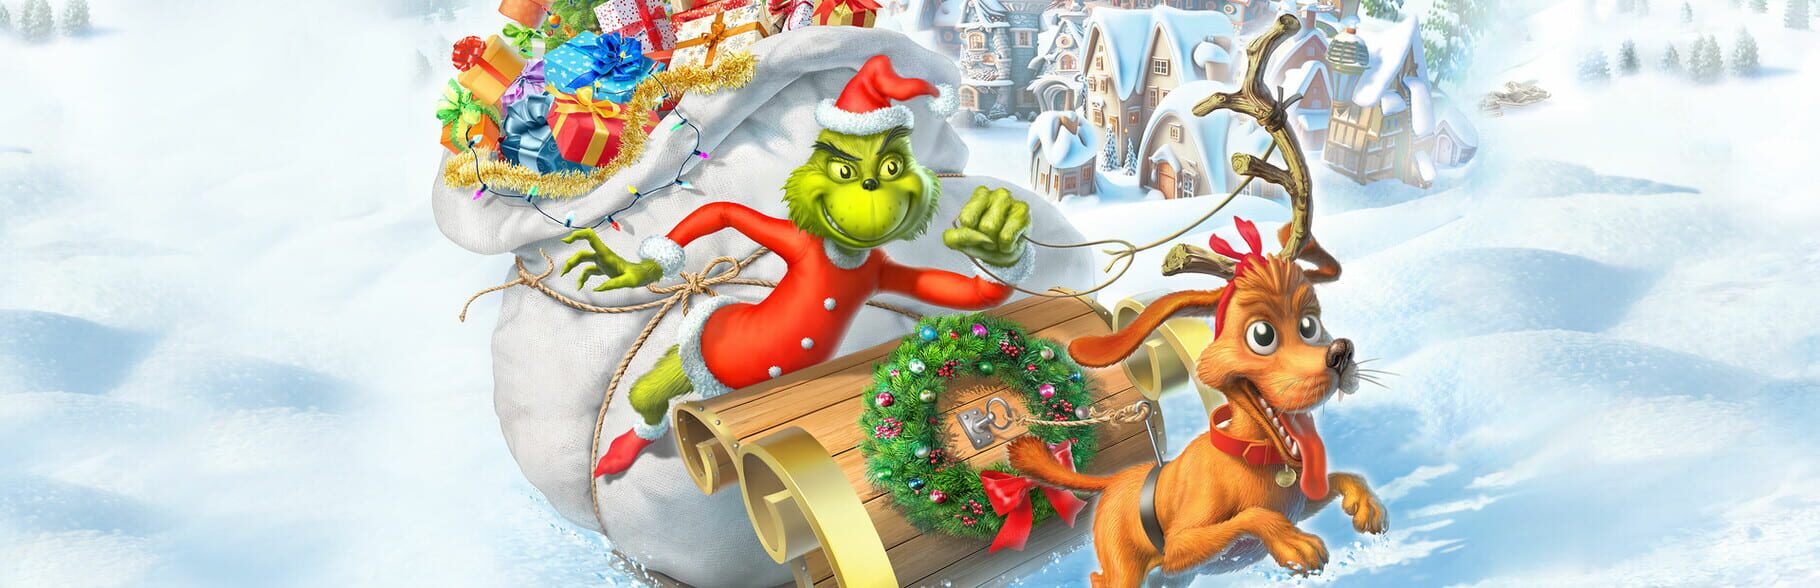 The Grinch: Christmas Adventures artwork